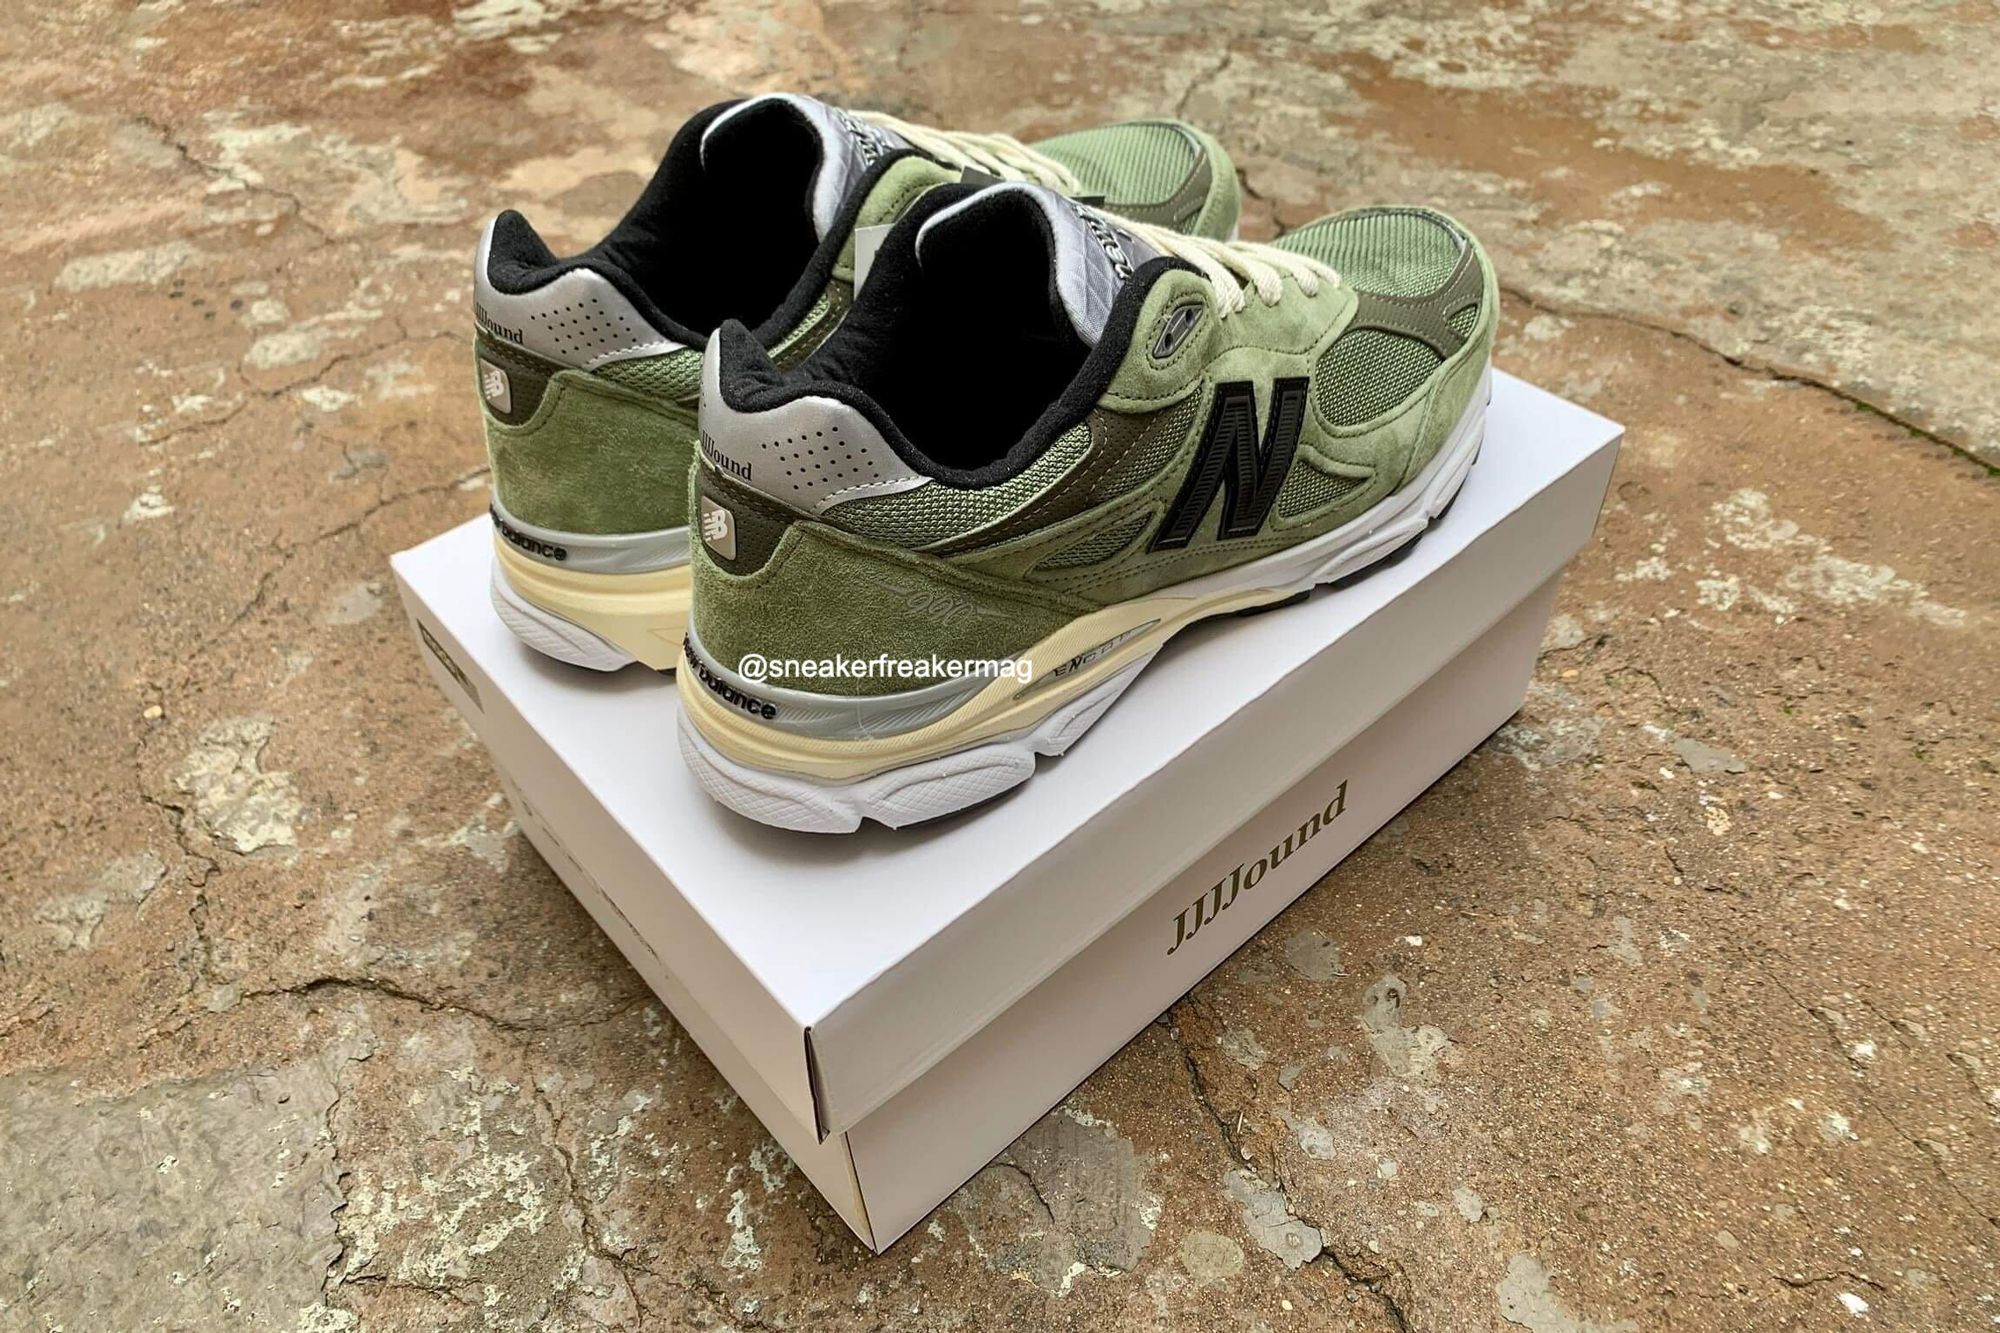 oyente soporte Crueldad First Look: JJJJound x New Balance 990v3 - Sneaker Freaker